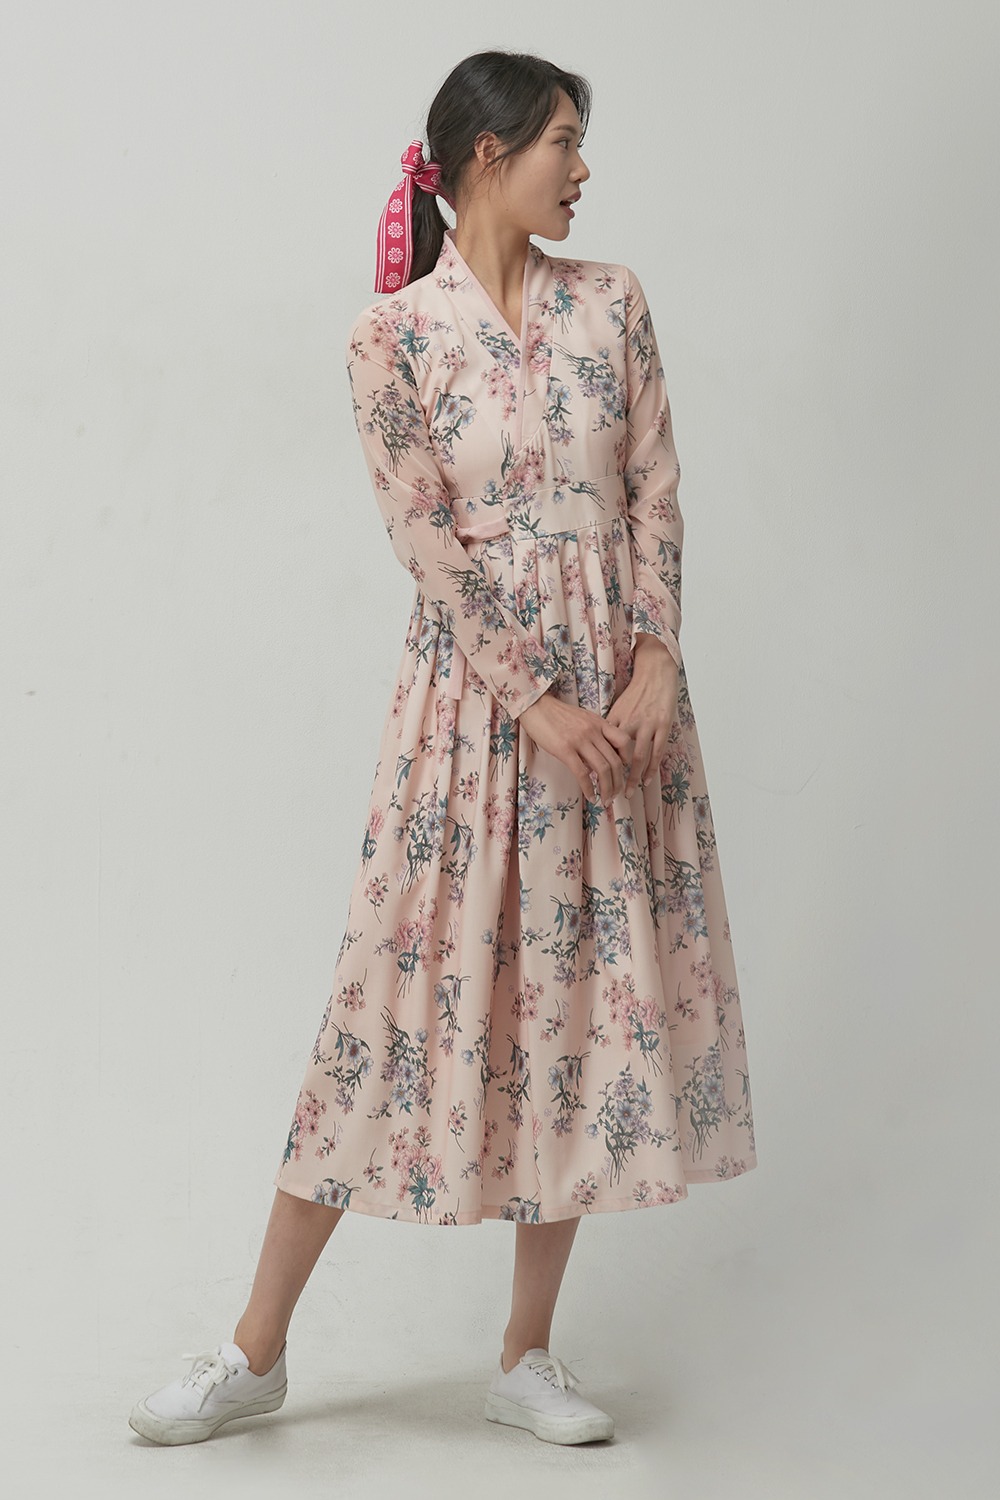 Sanho Flower Cheollik Dress [Pink]